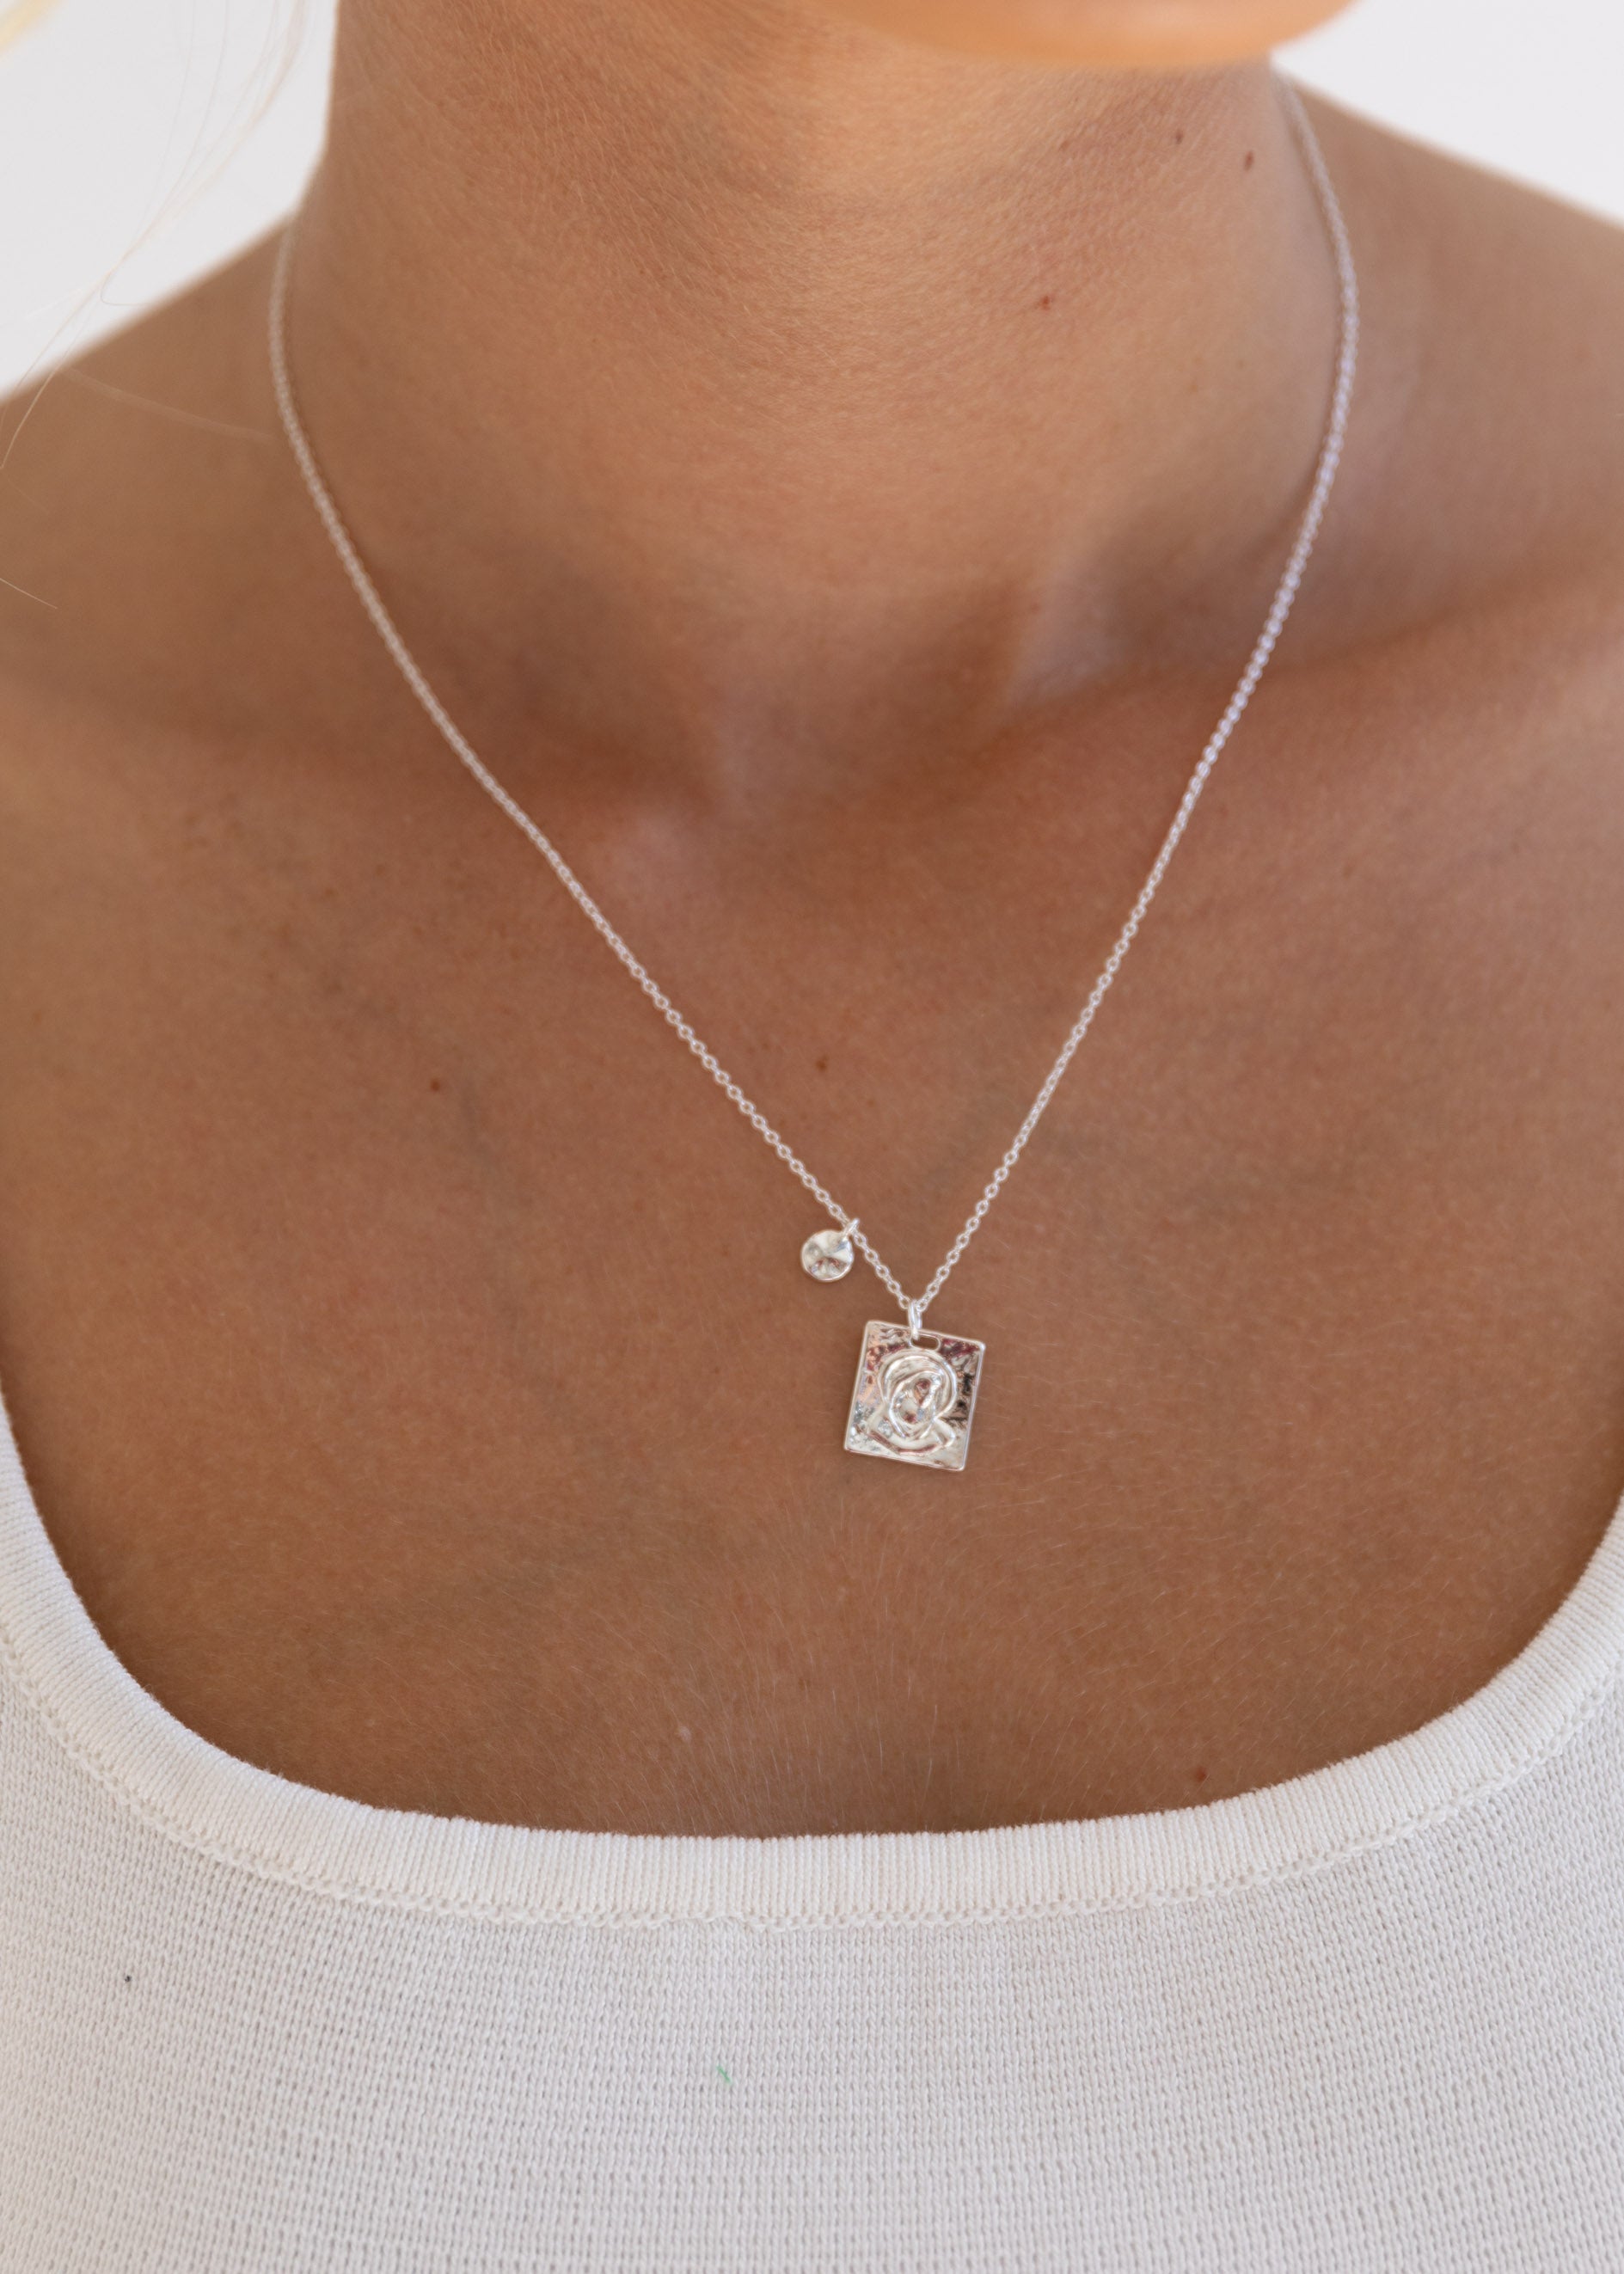 Theta Charm Necklace - Silver